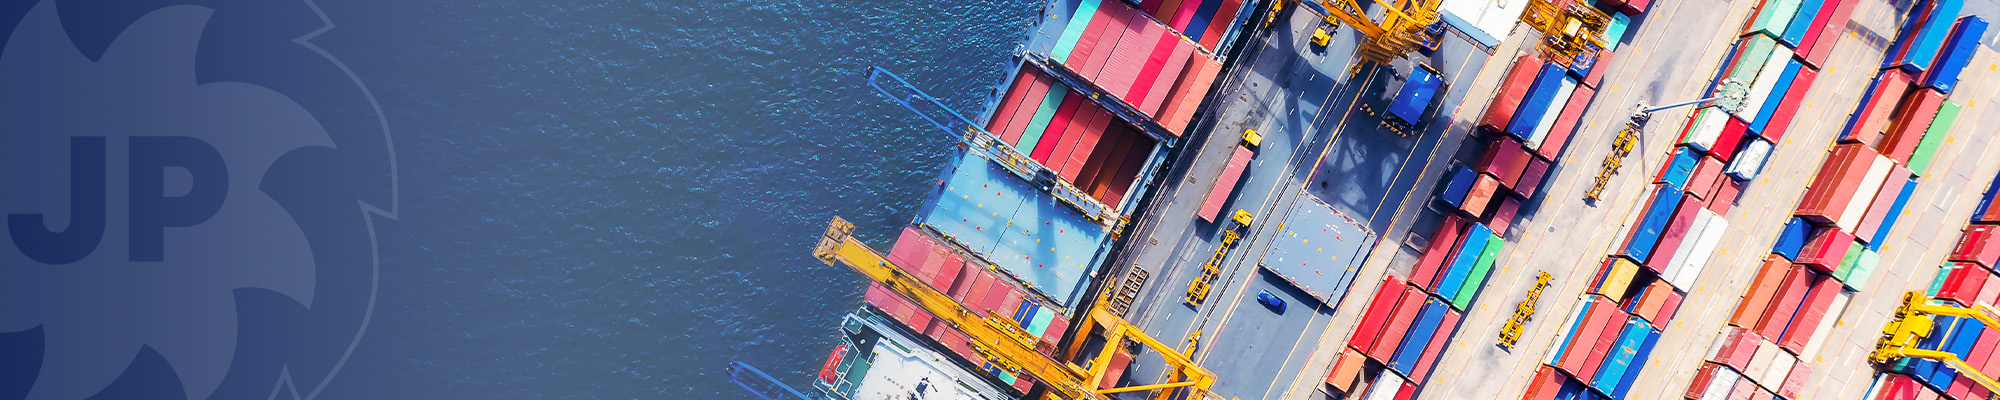 Logistics & Supply Chain Services